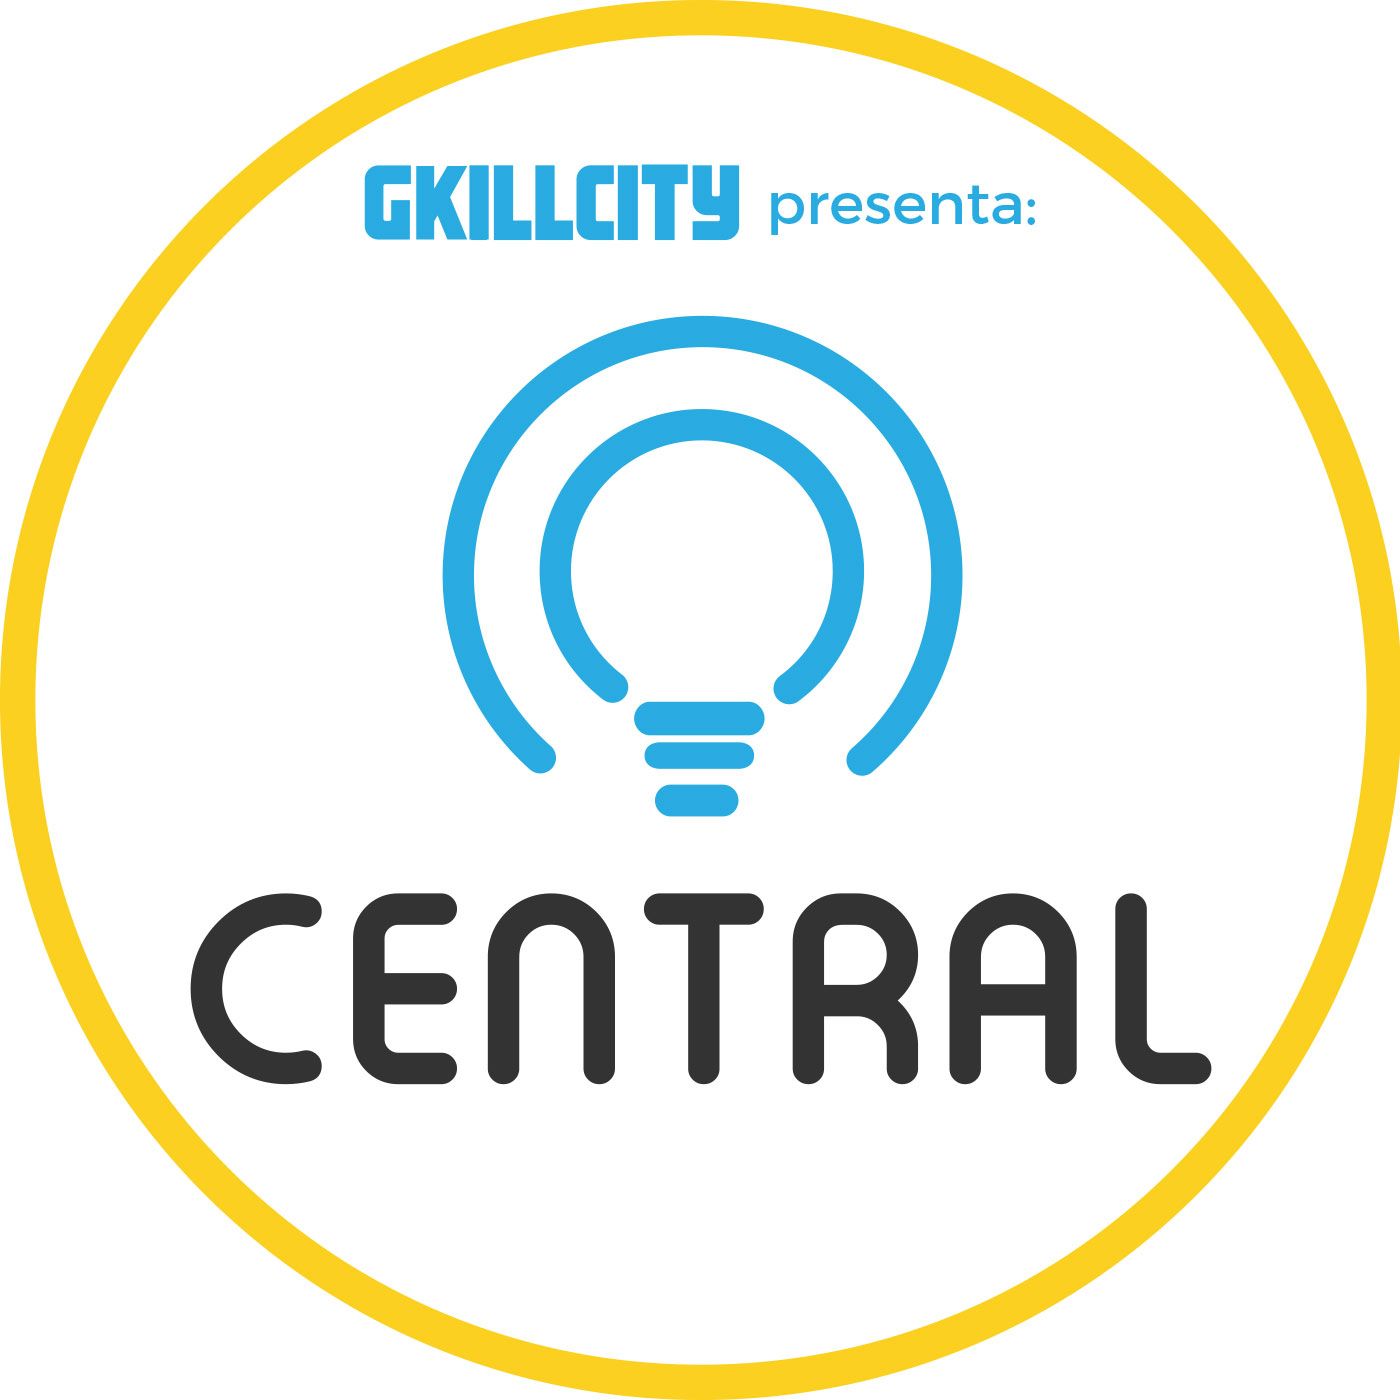 GKillCity presenta: Central